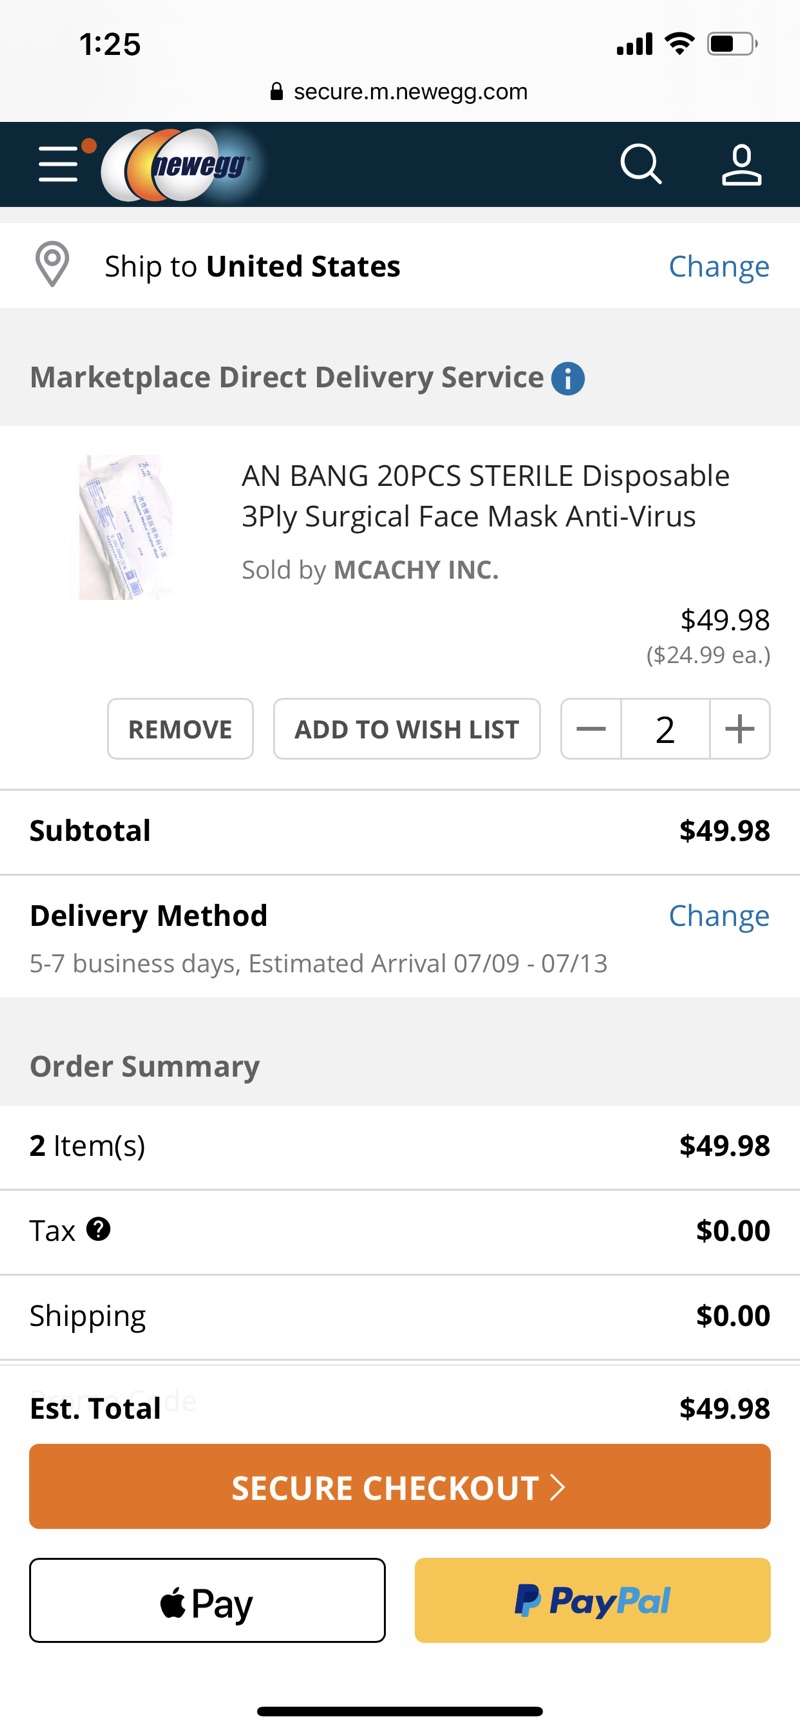 AN BANG 20PCS STERILE Disposable 3Ply Surgical Face Mask Anti-Virus - Newegg.com
安邦一次性医用外科口罩 20片